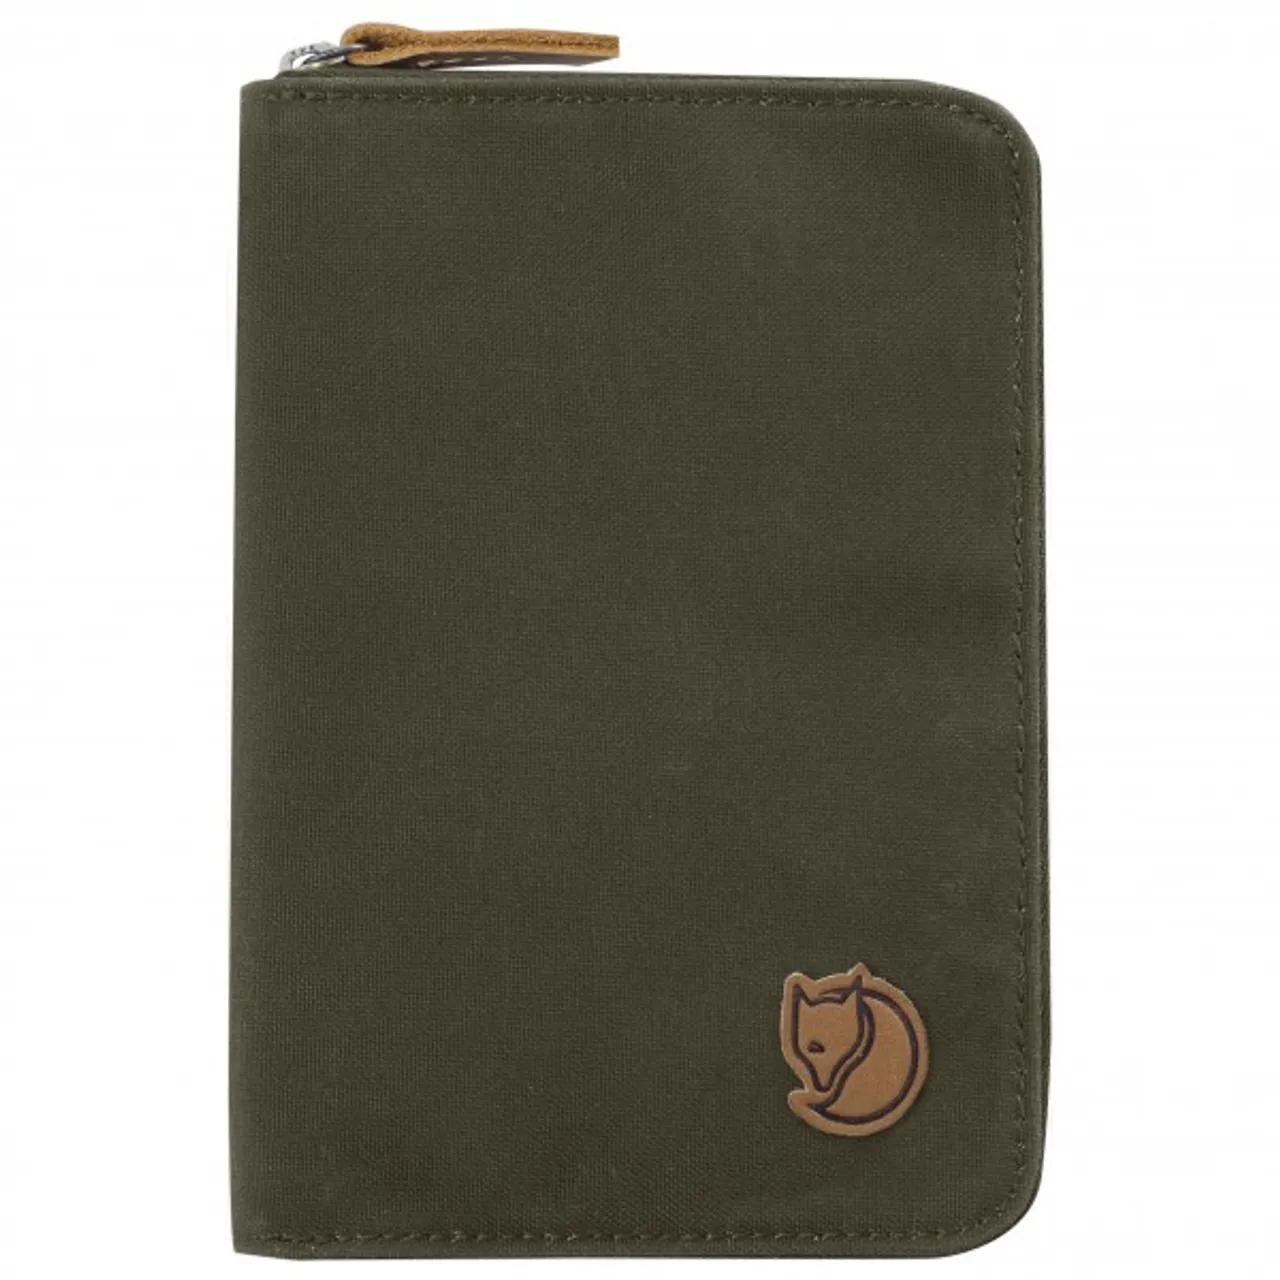 Fjällräven - Passport Wallet - Wallet size One Size, olive/brown